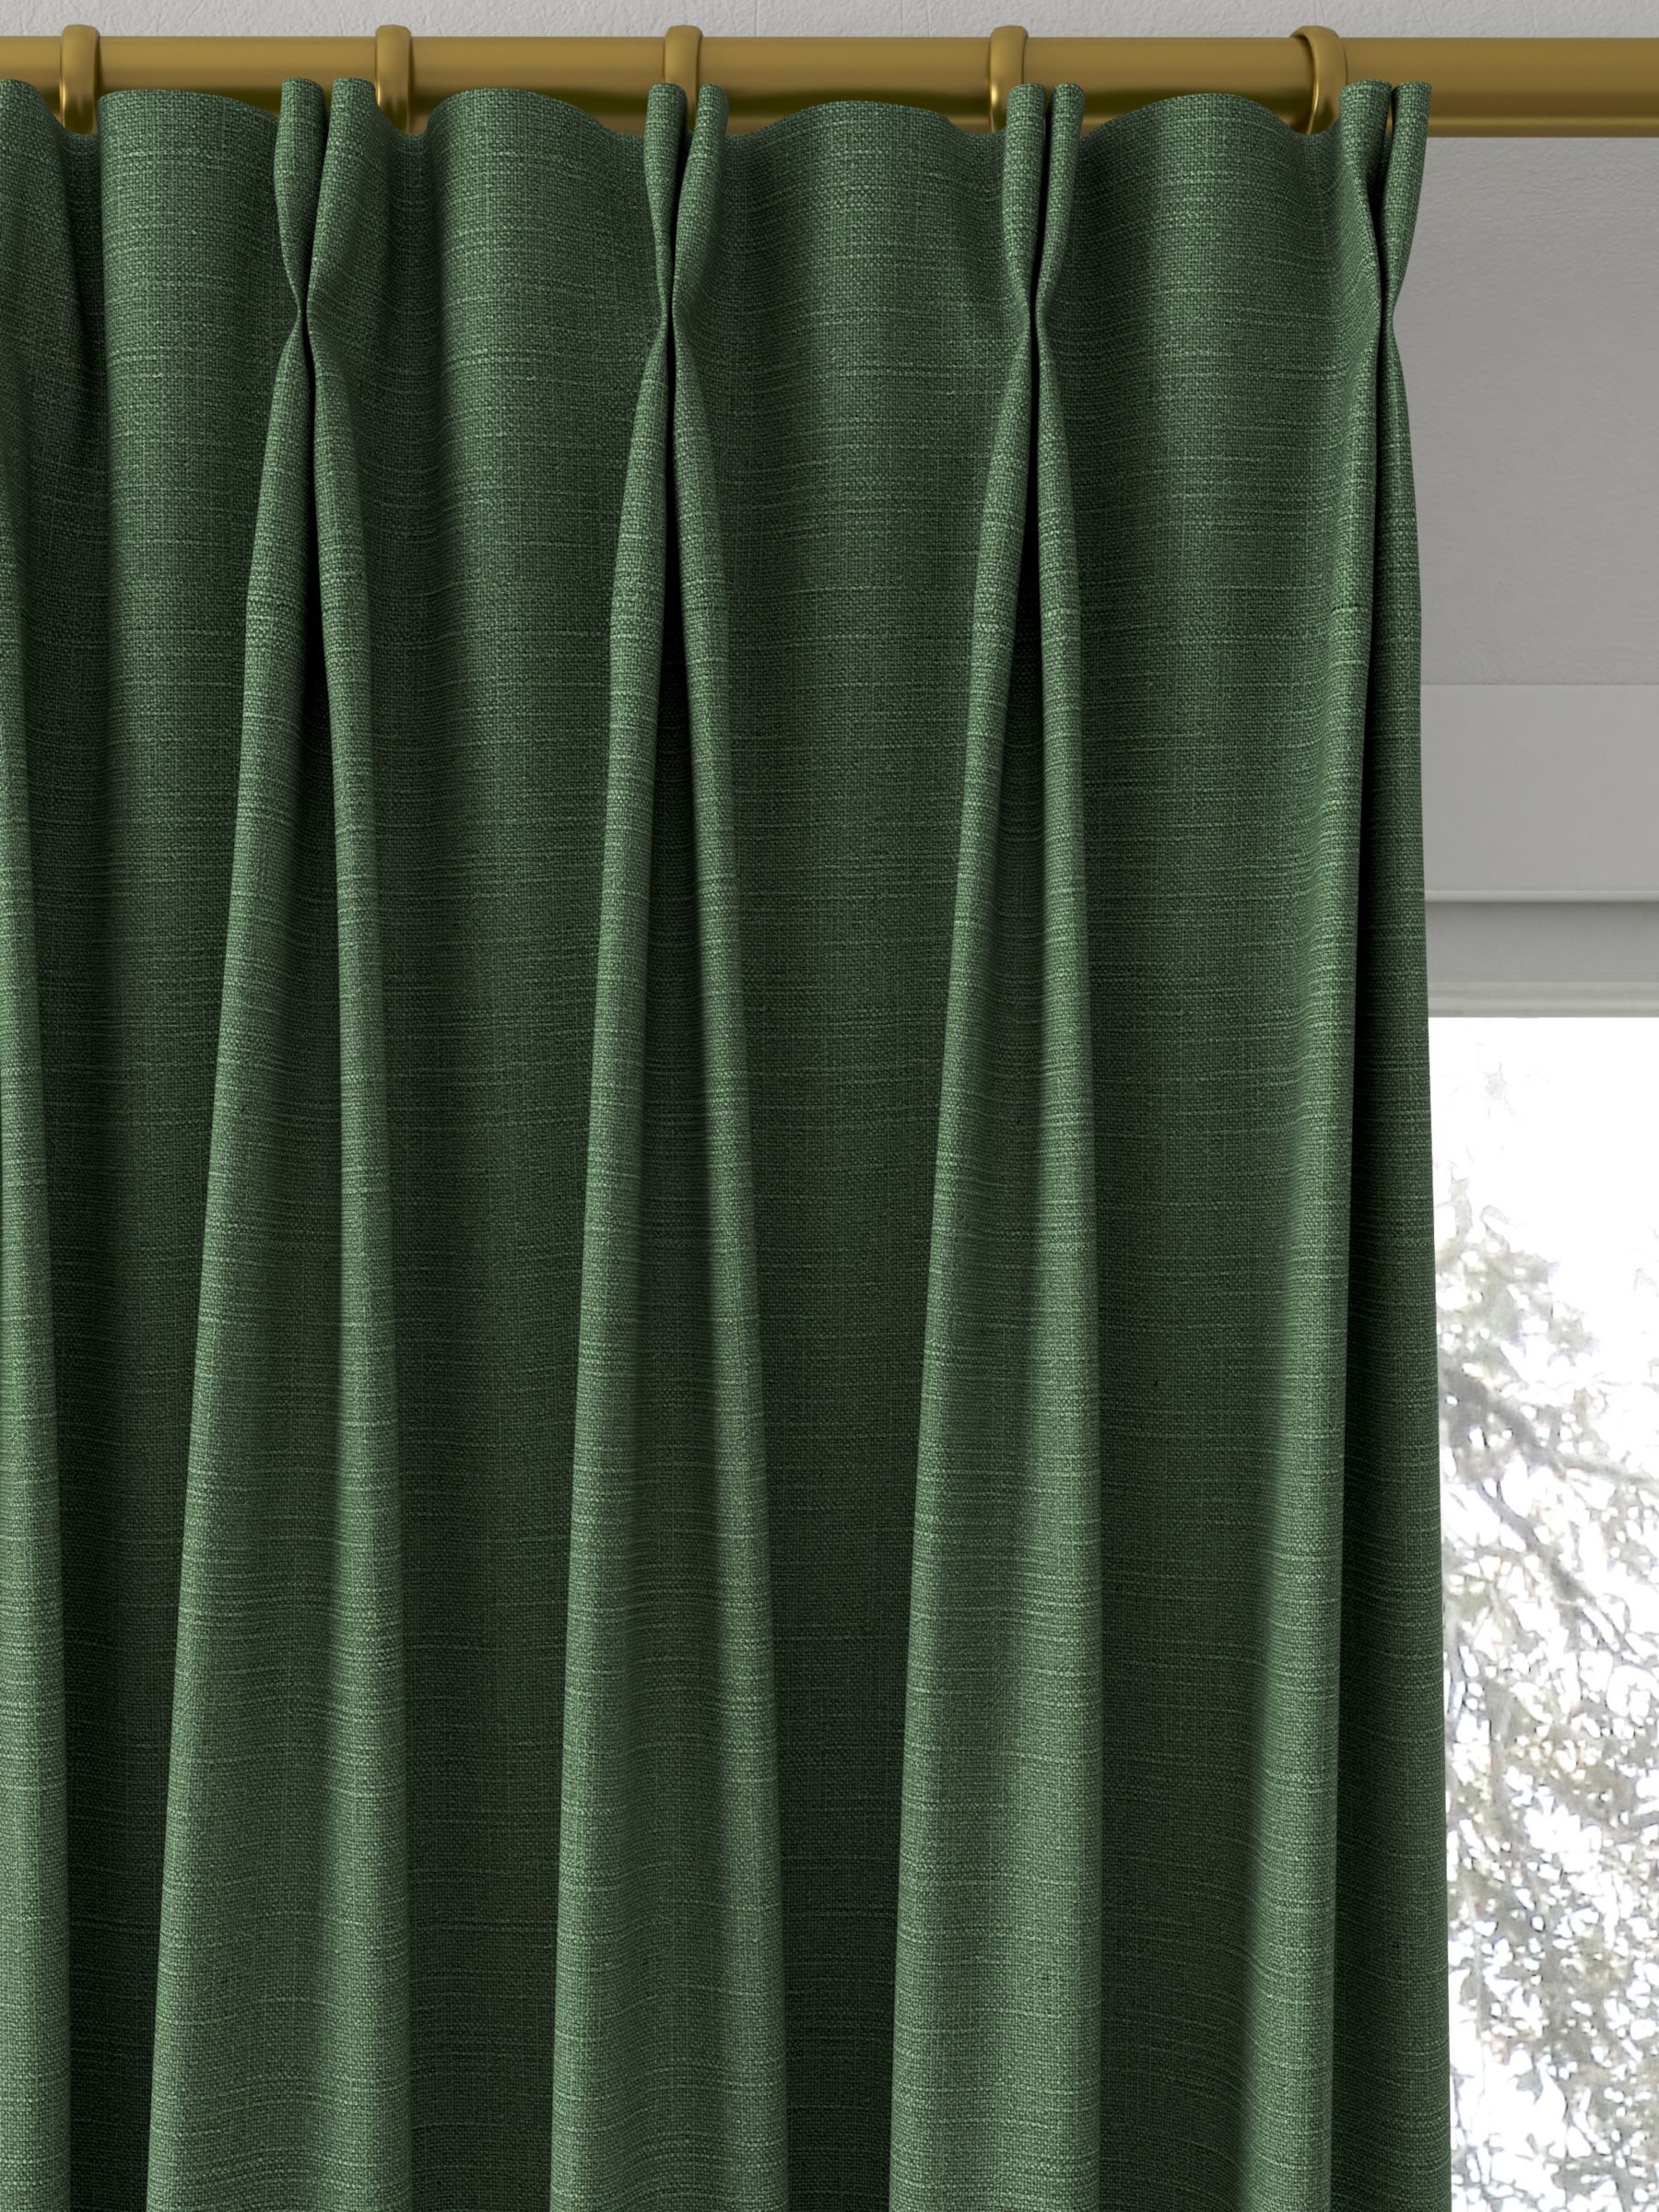 Sanderson Tuscany II Made to Measure Curtains, Sage